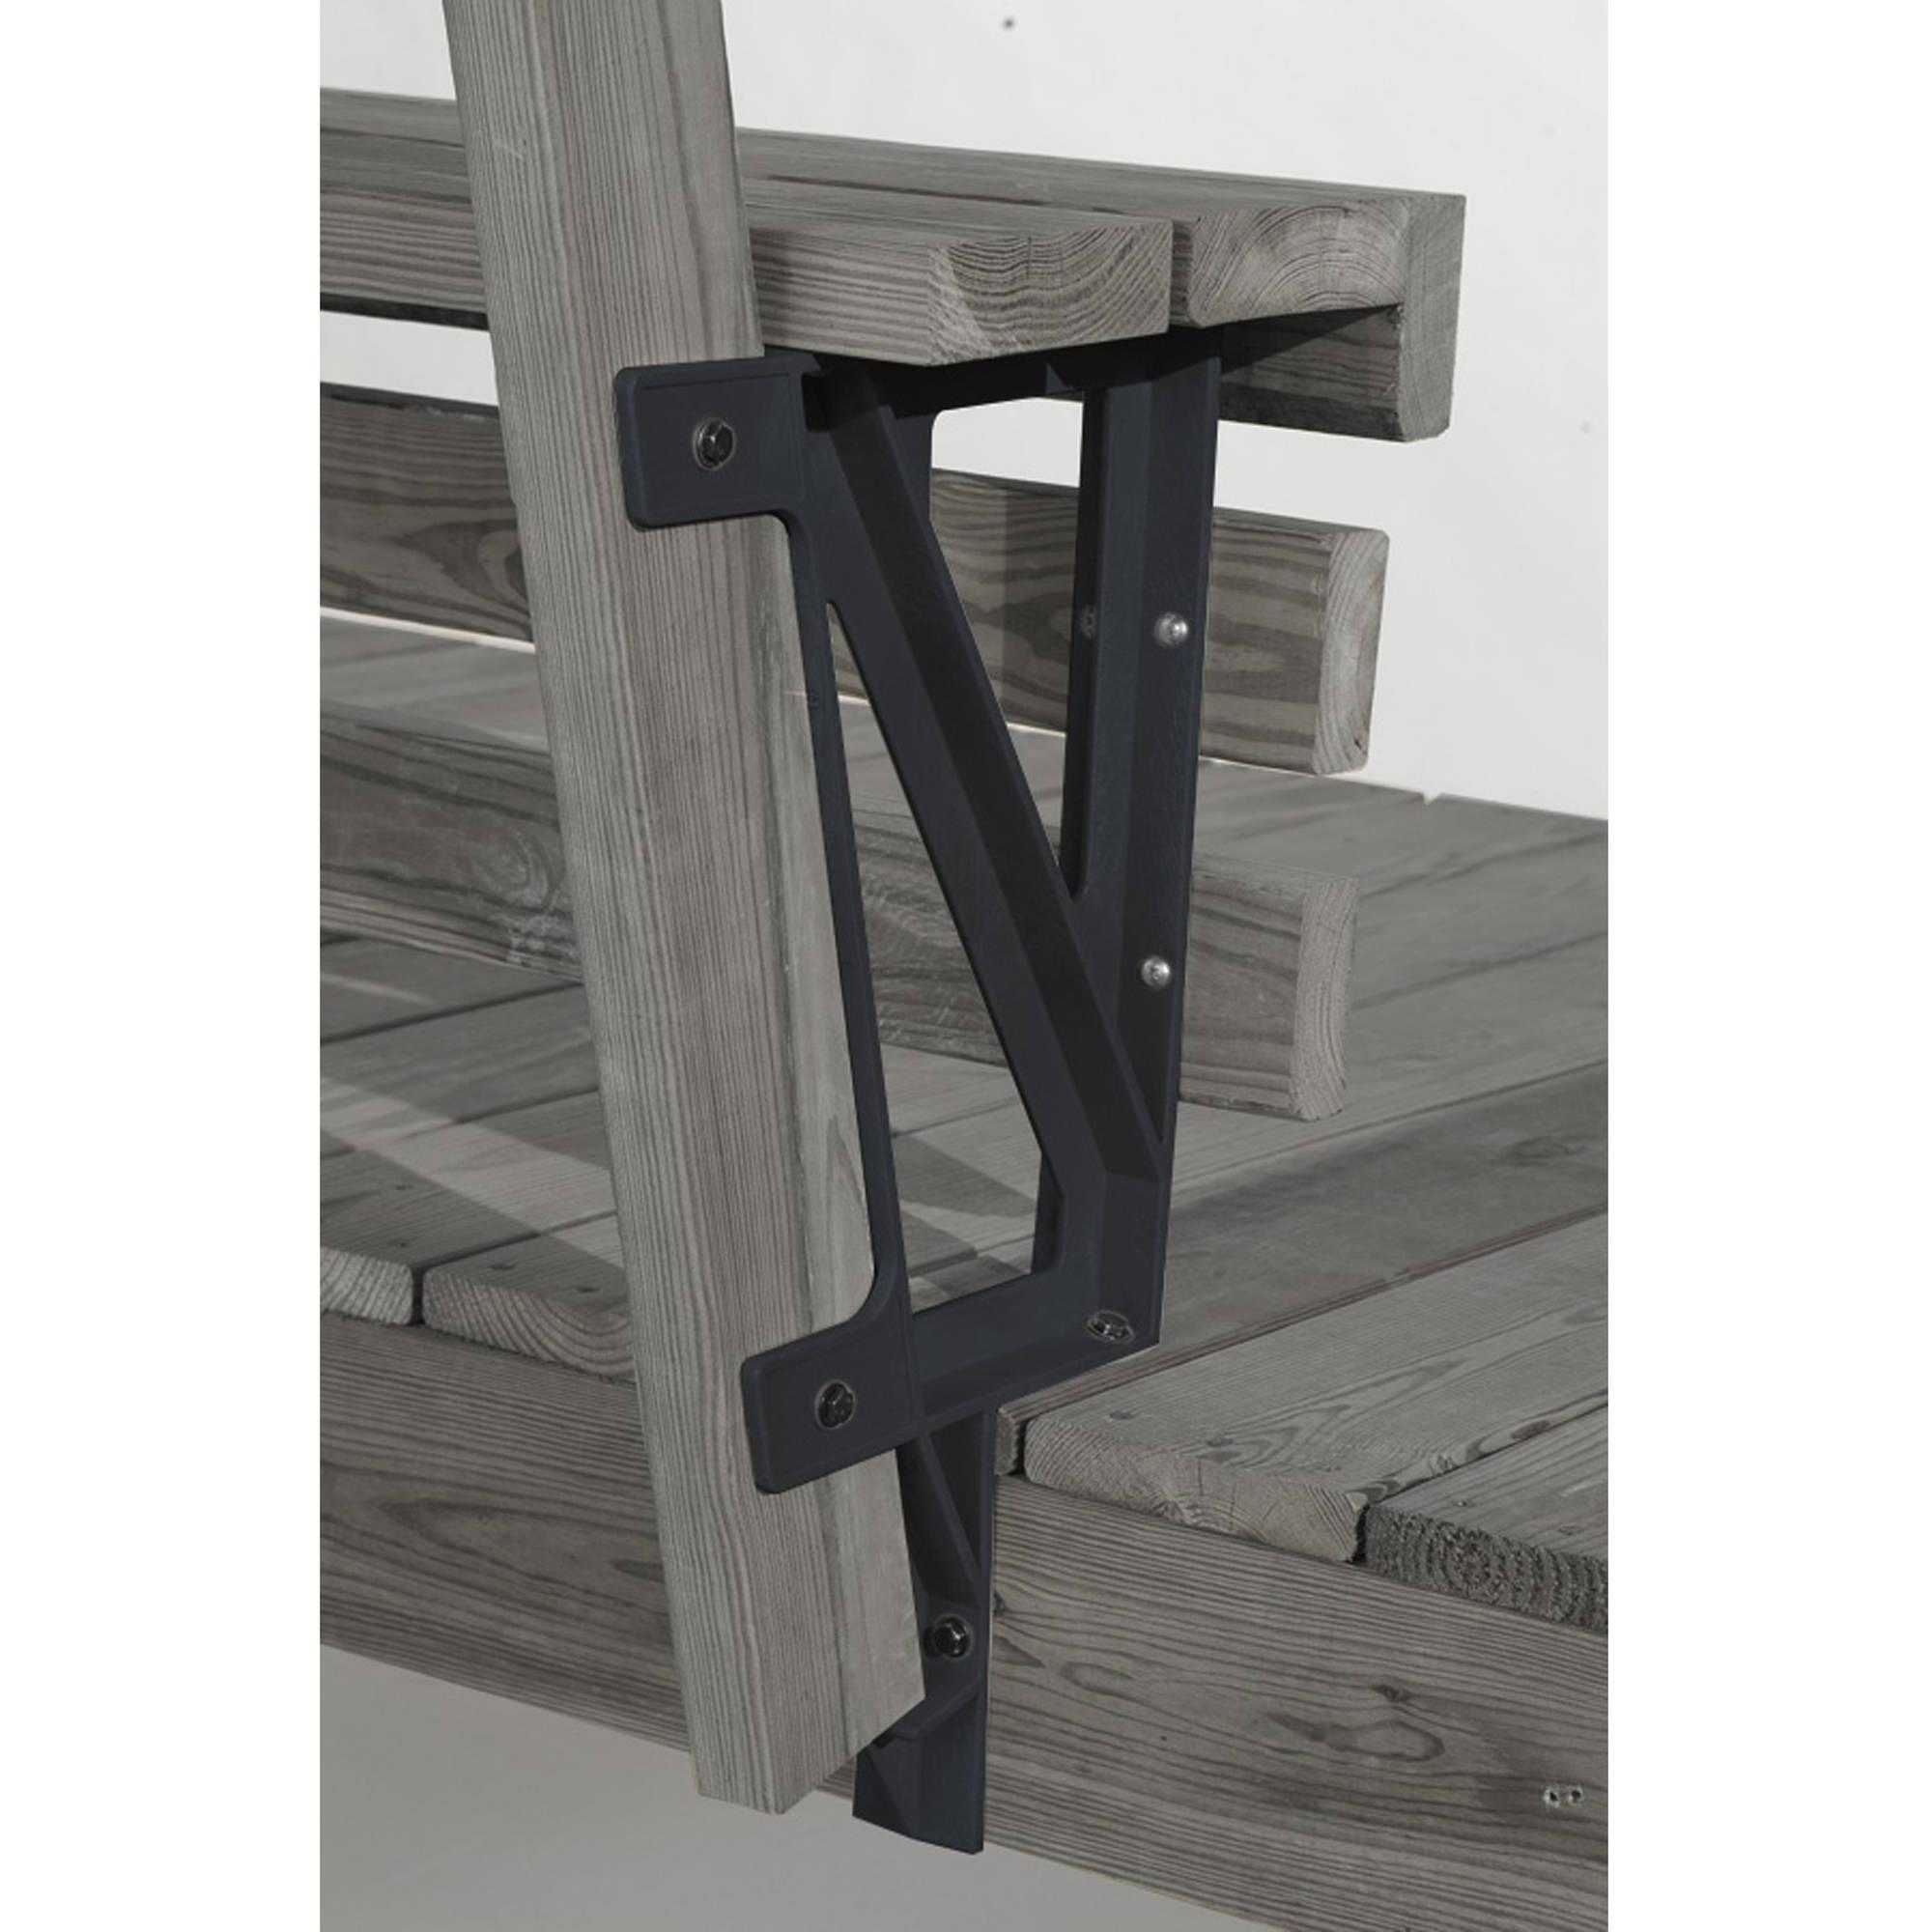 2x4basics Dekmate Deck Bench Brackets – Black, 2 pack - image 5 of 5